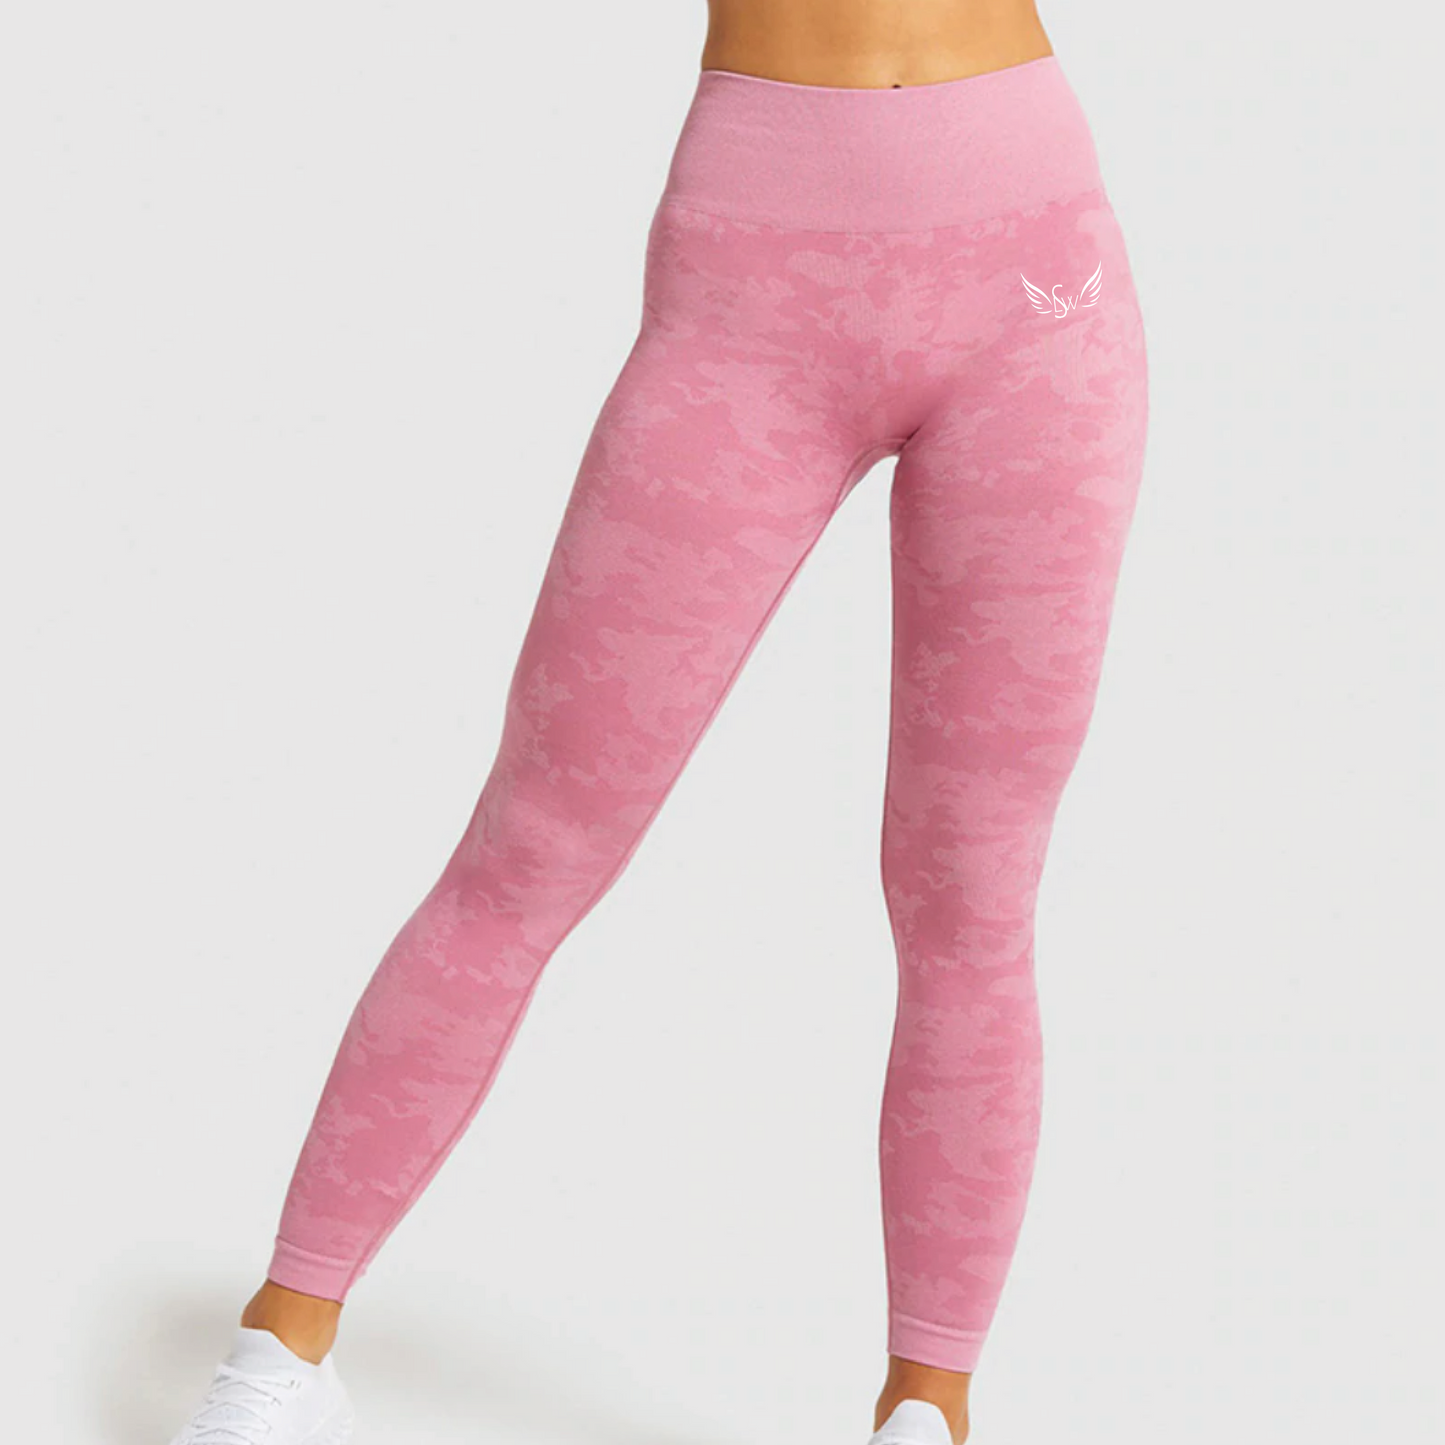 Camo - Pink - Lola's sportswear